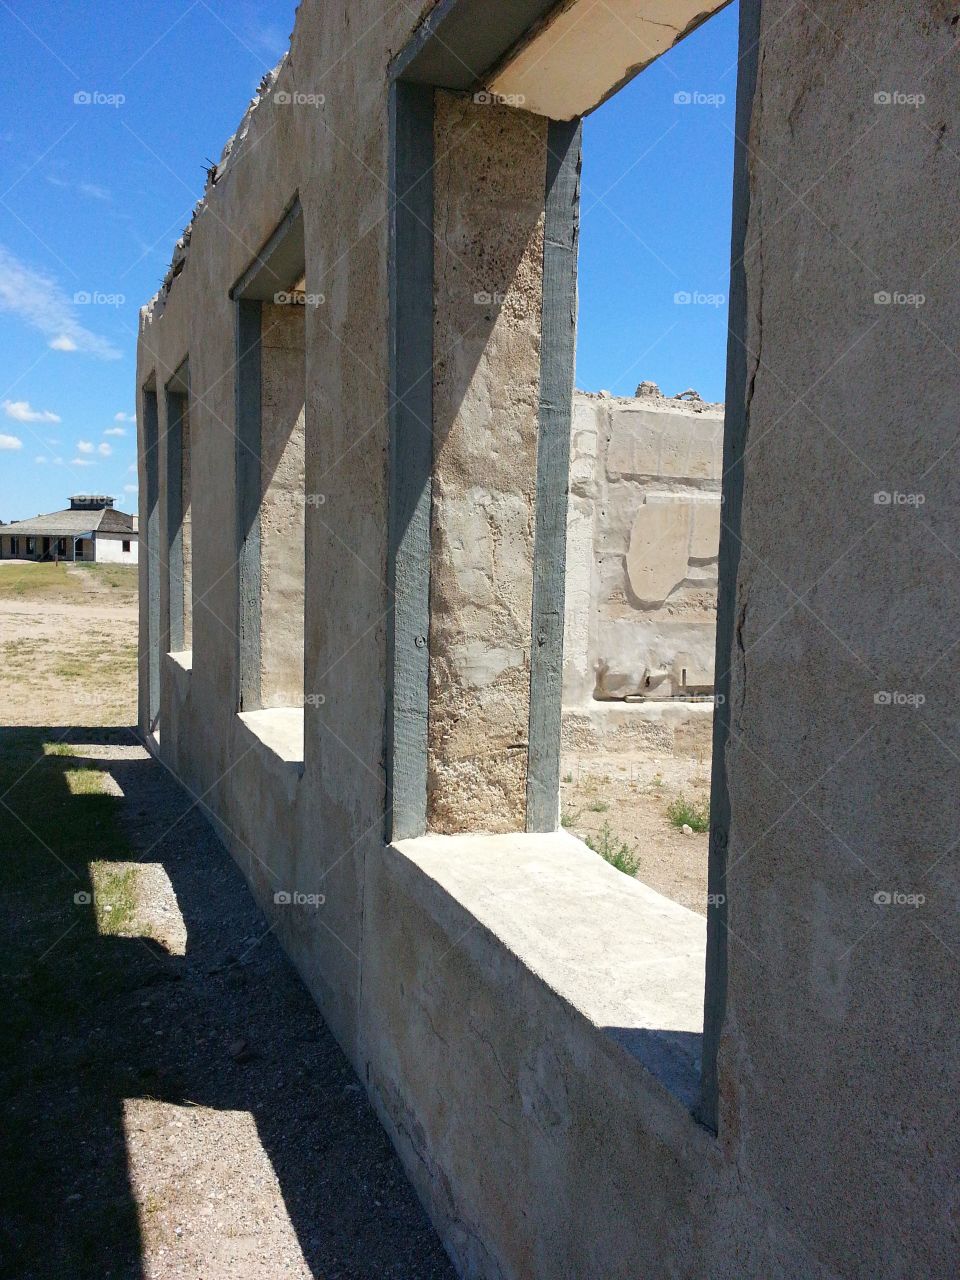 Fort Laramie ruins